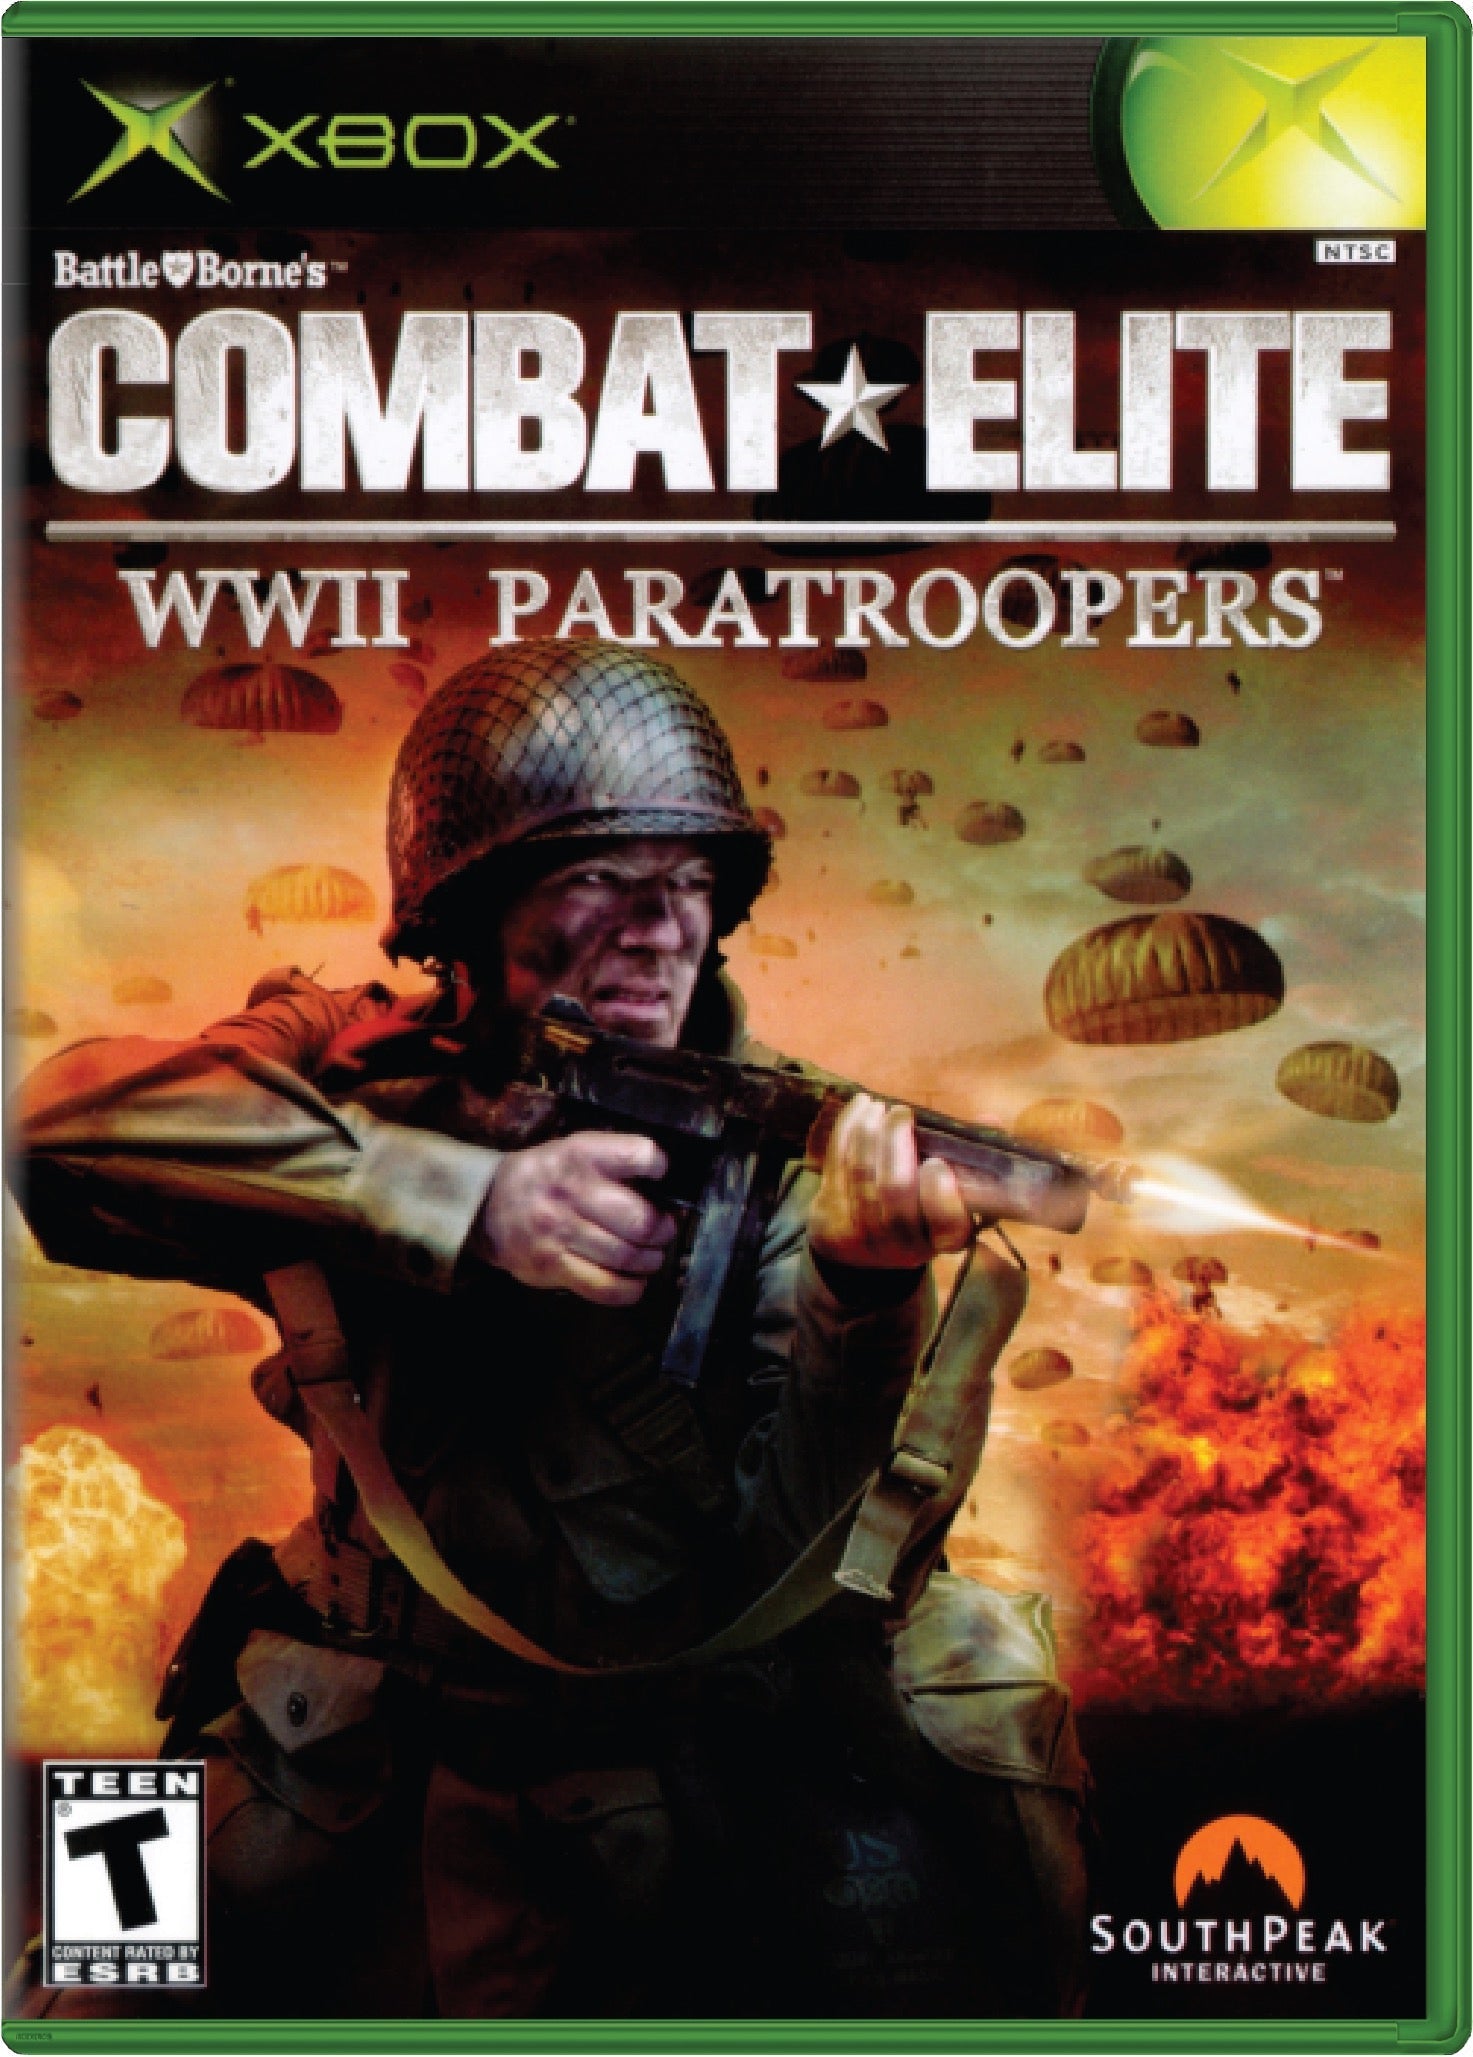 Combat Elite WWII Paratroopers Cover Art